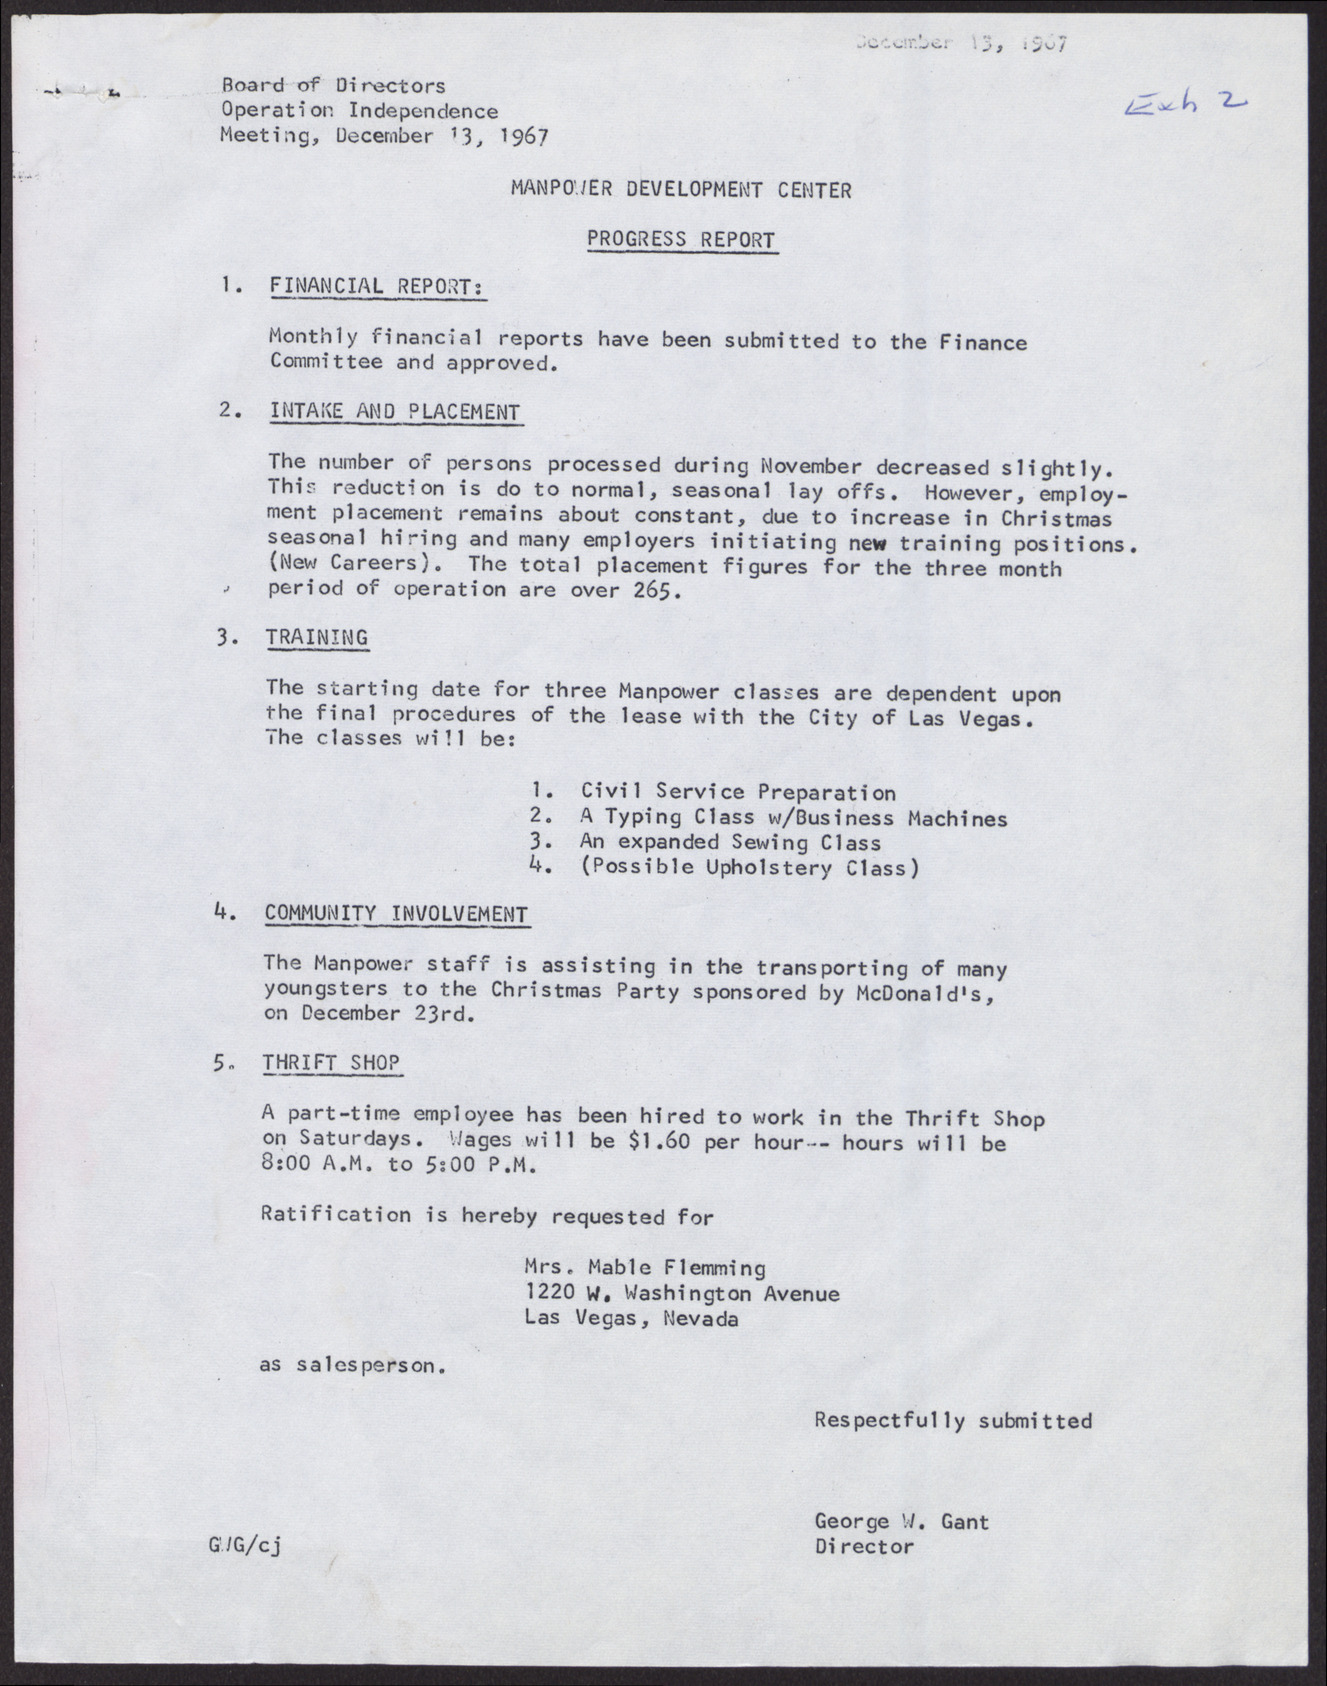 Manpower Development center Progress Report and list of personnel (2 pages), December 13, 1967